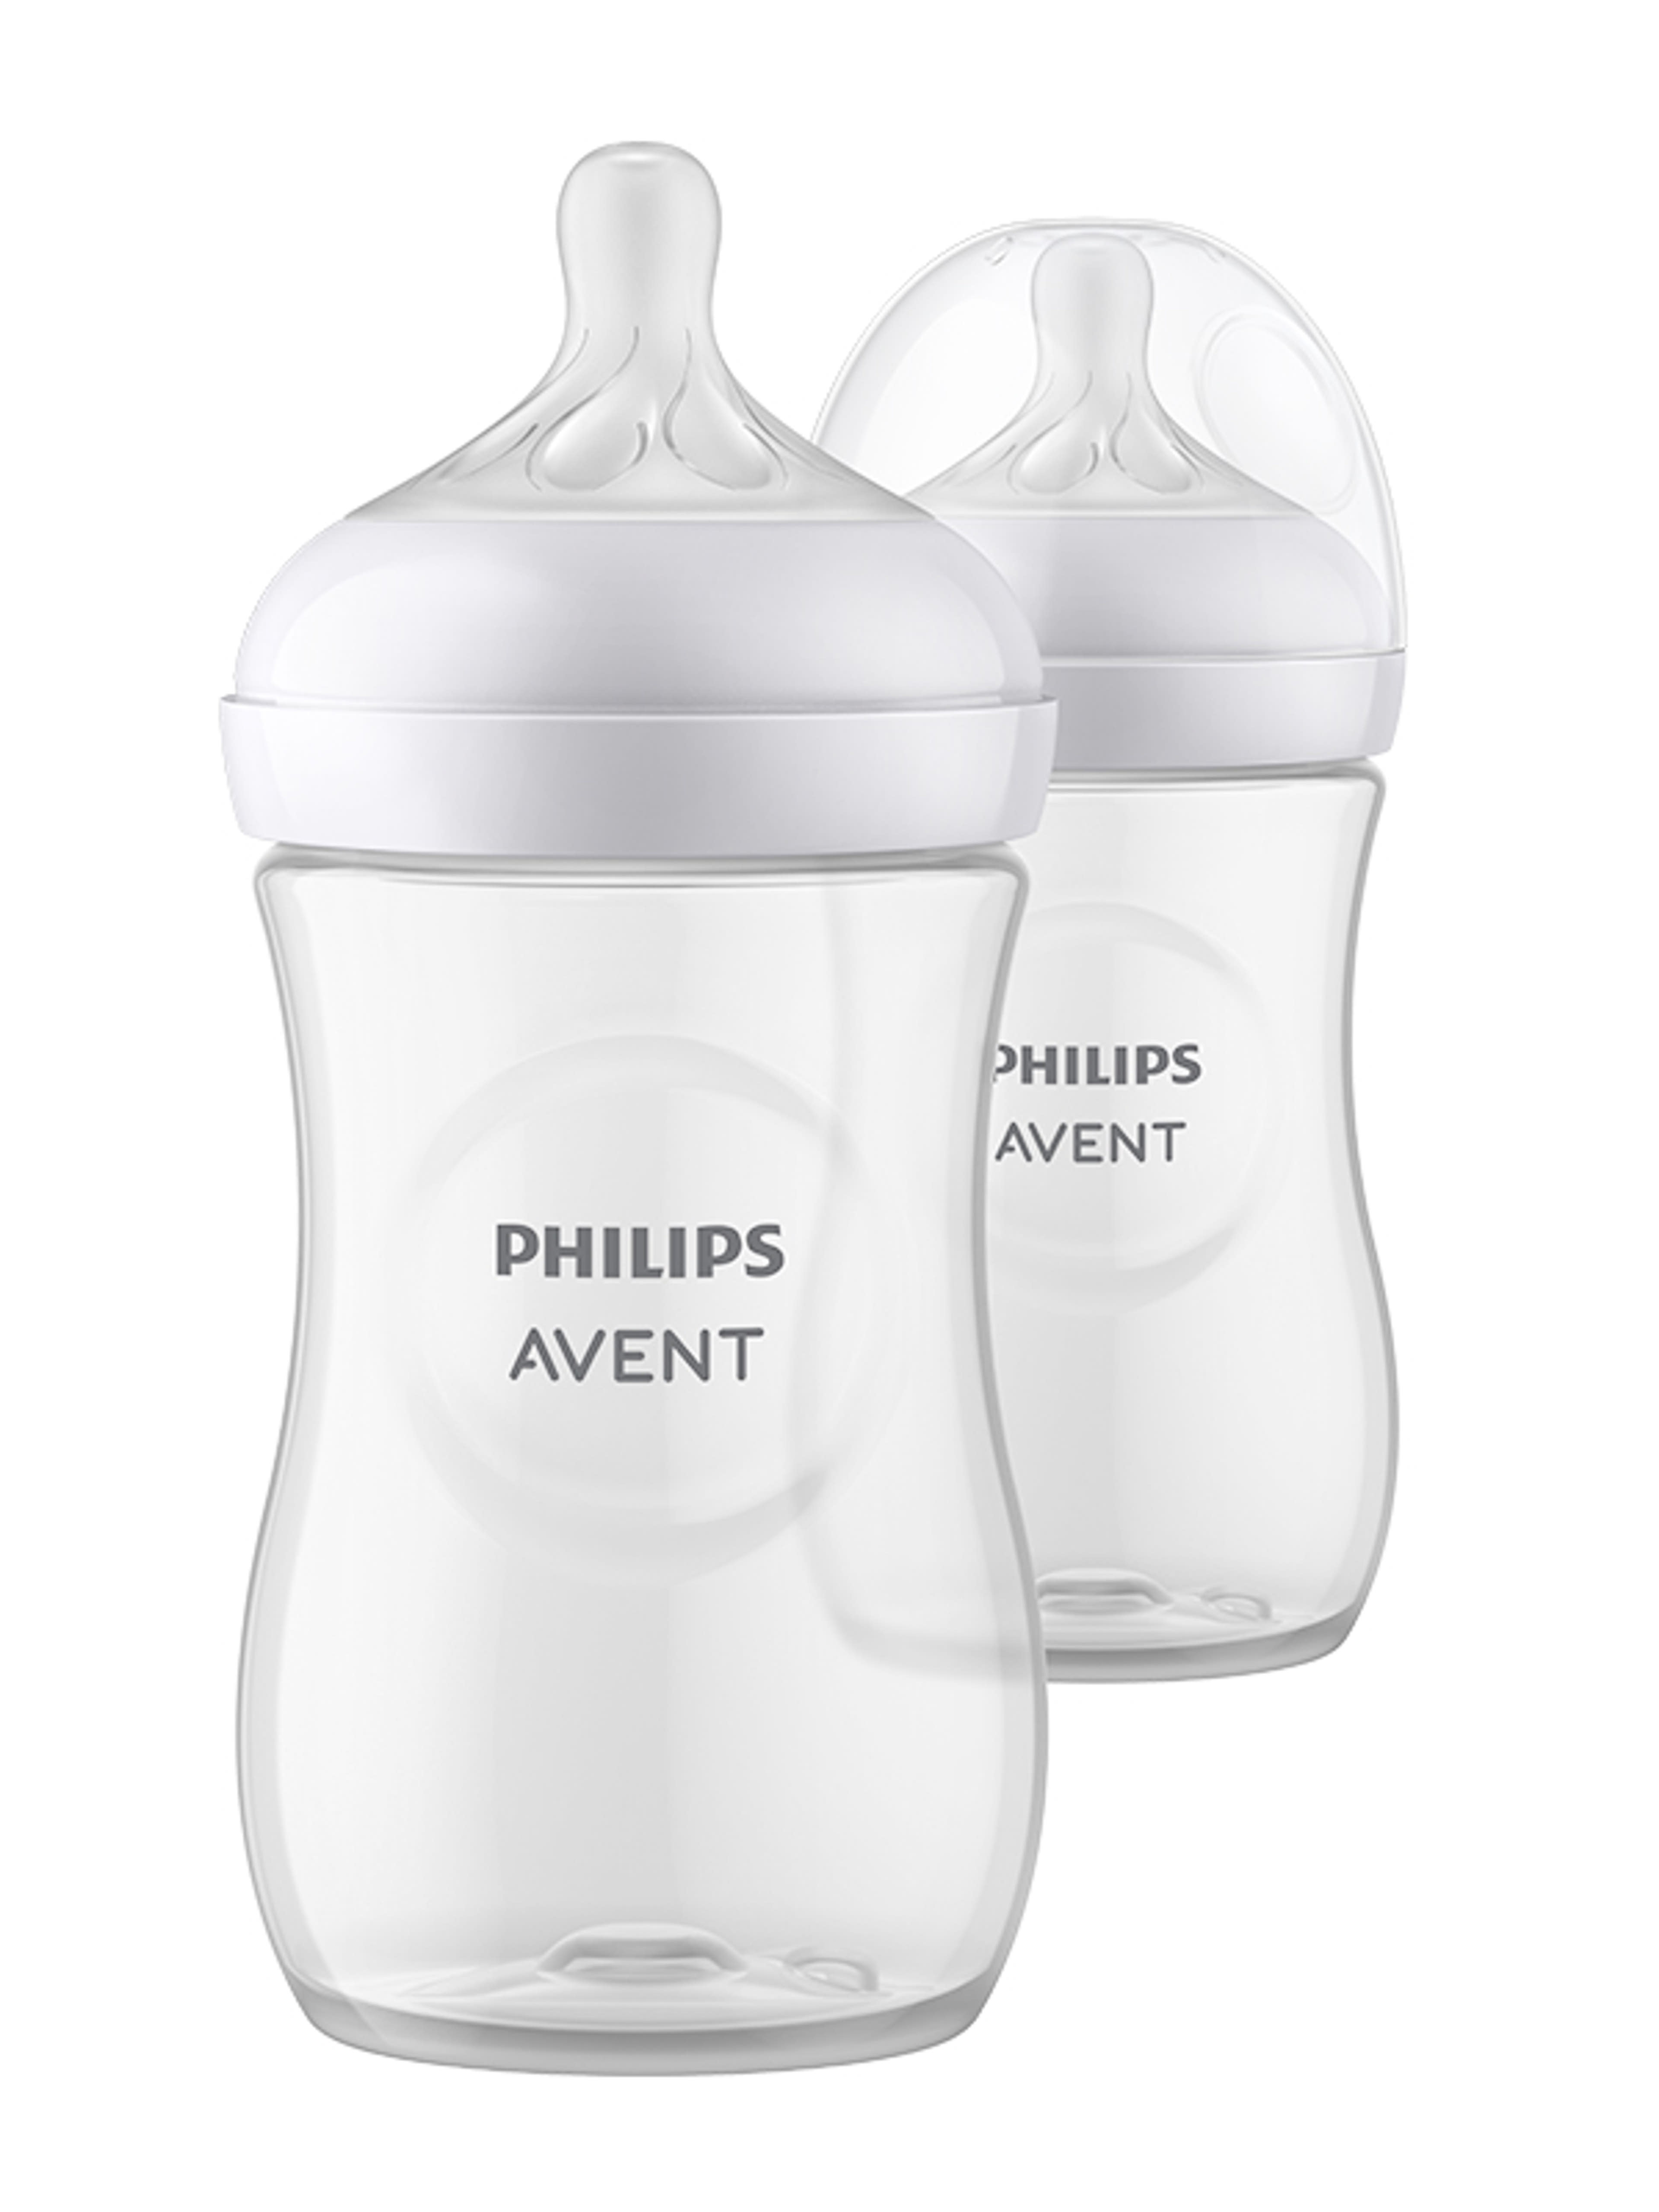 Philips Avent Natural Response cumisüveg 1 hónapos kortól 260 ml - 2 db-4